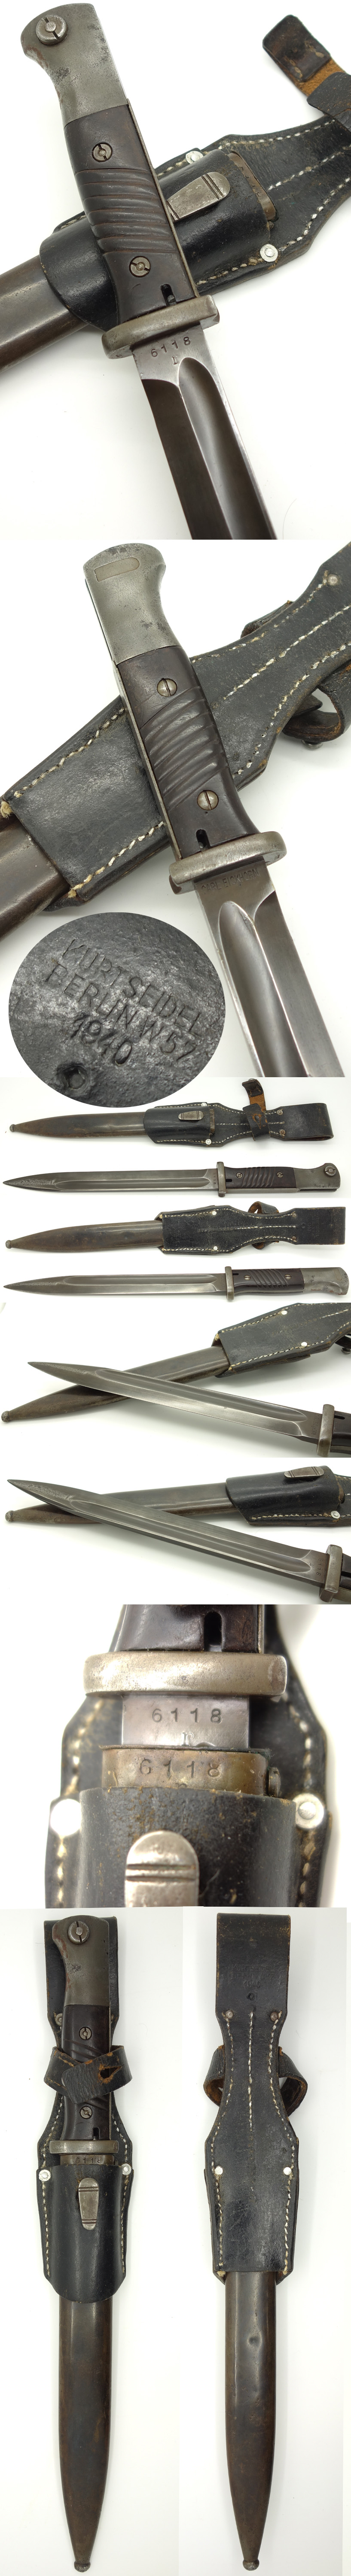 Matching - K98 Bayonet by Carl Eickhorn 1938